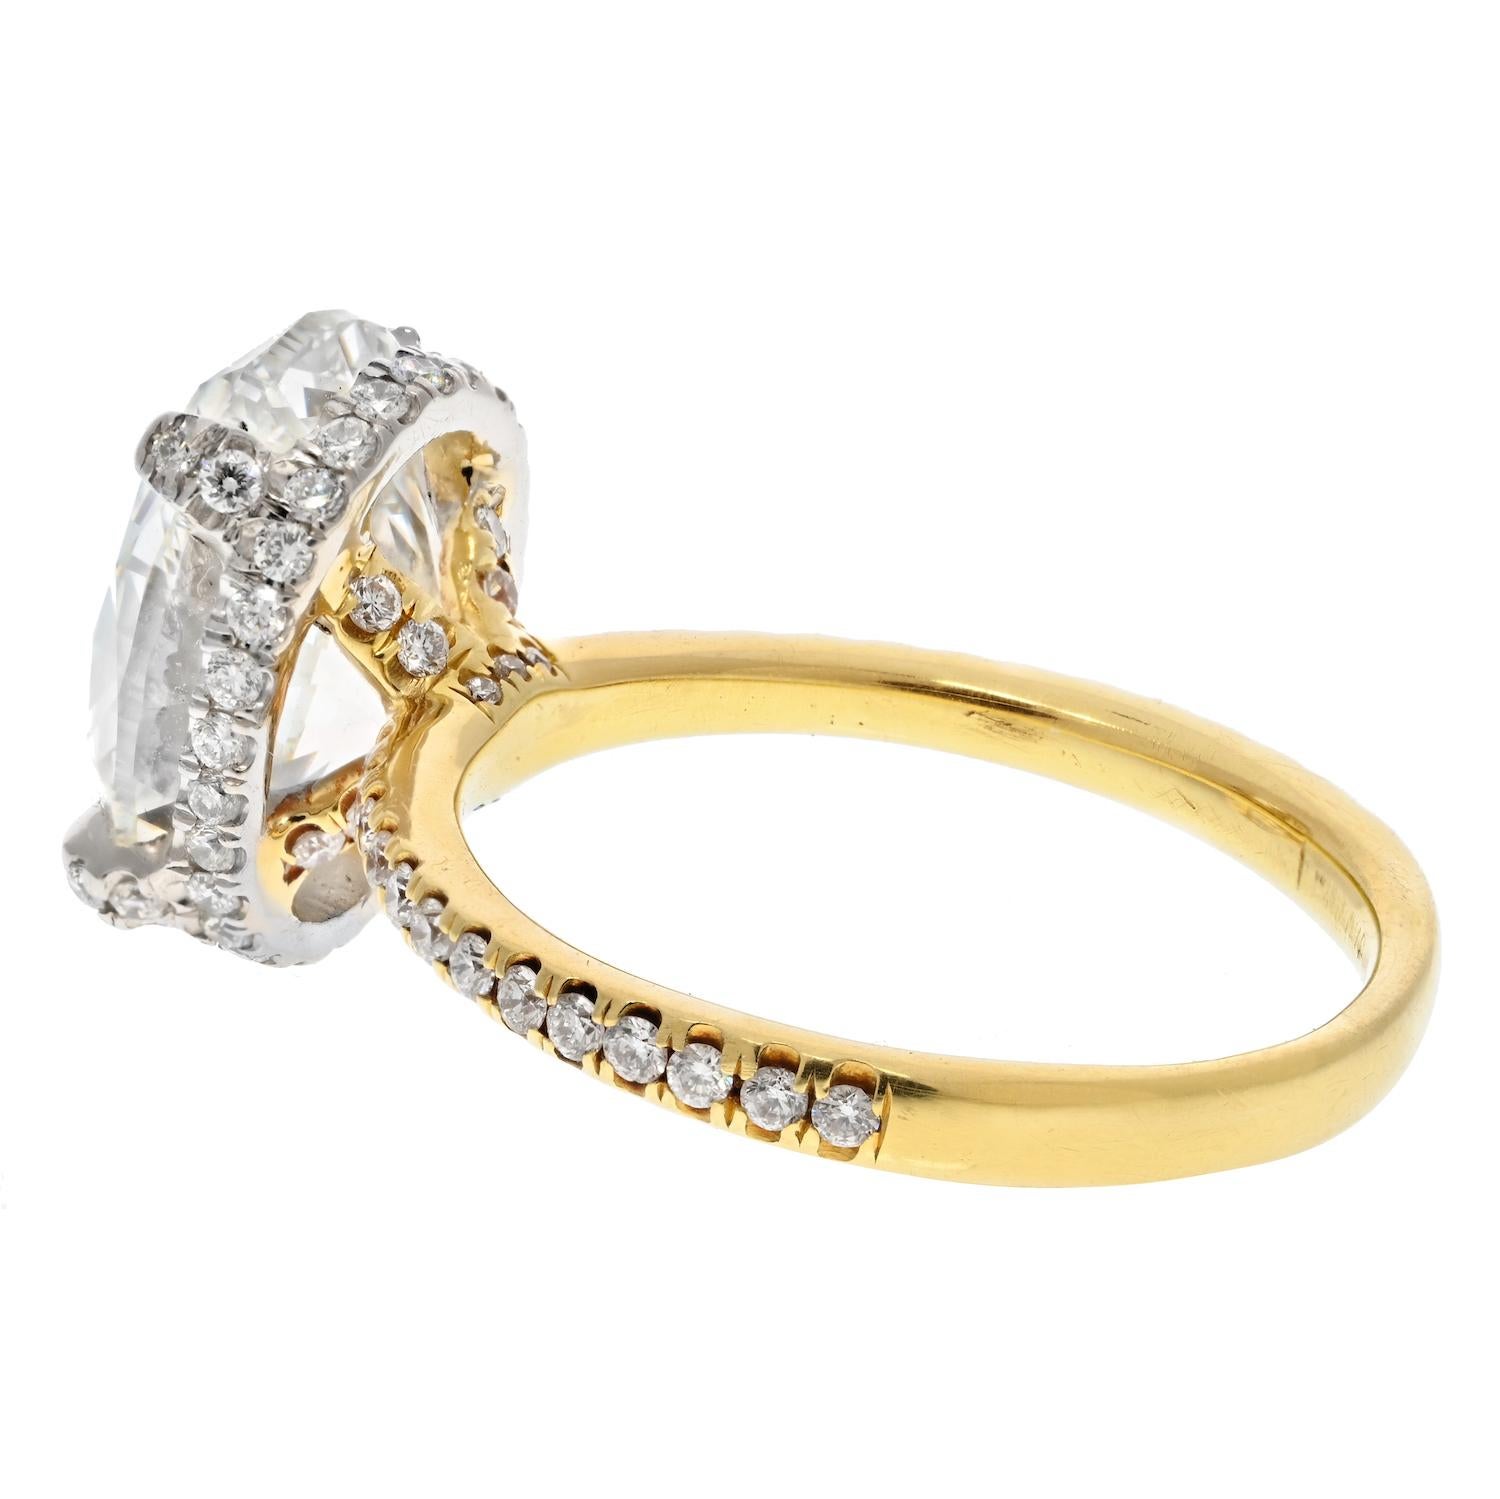 5 carat oval diamond ring on hand